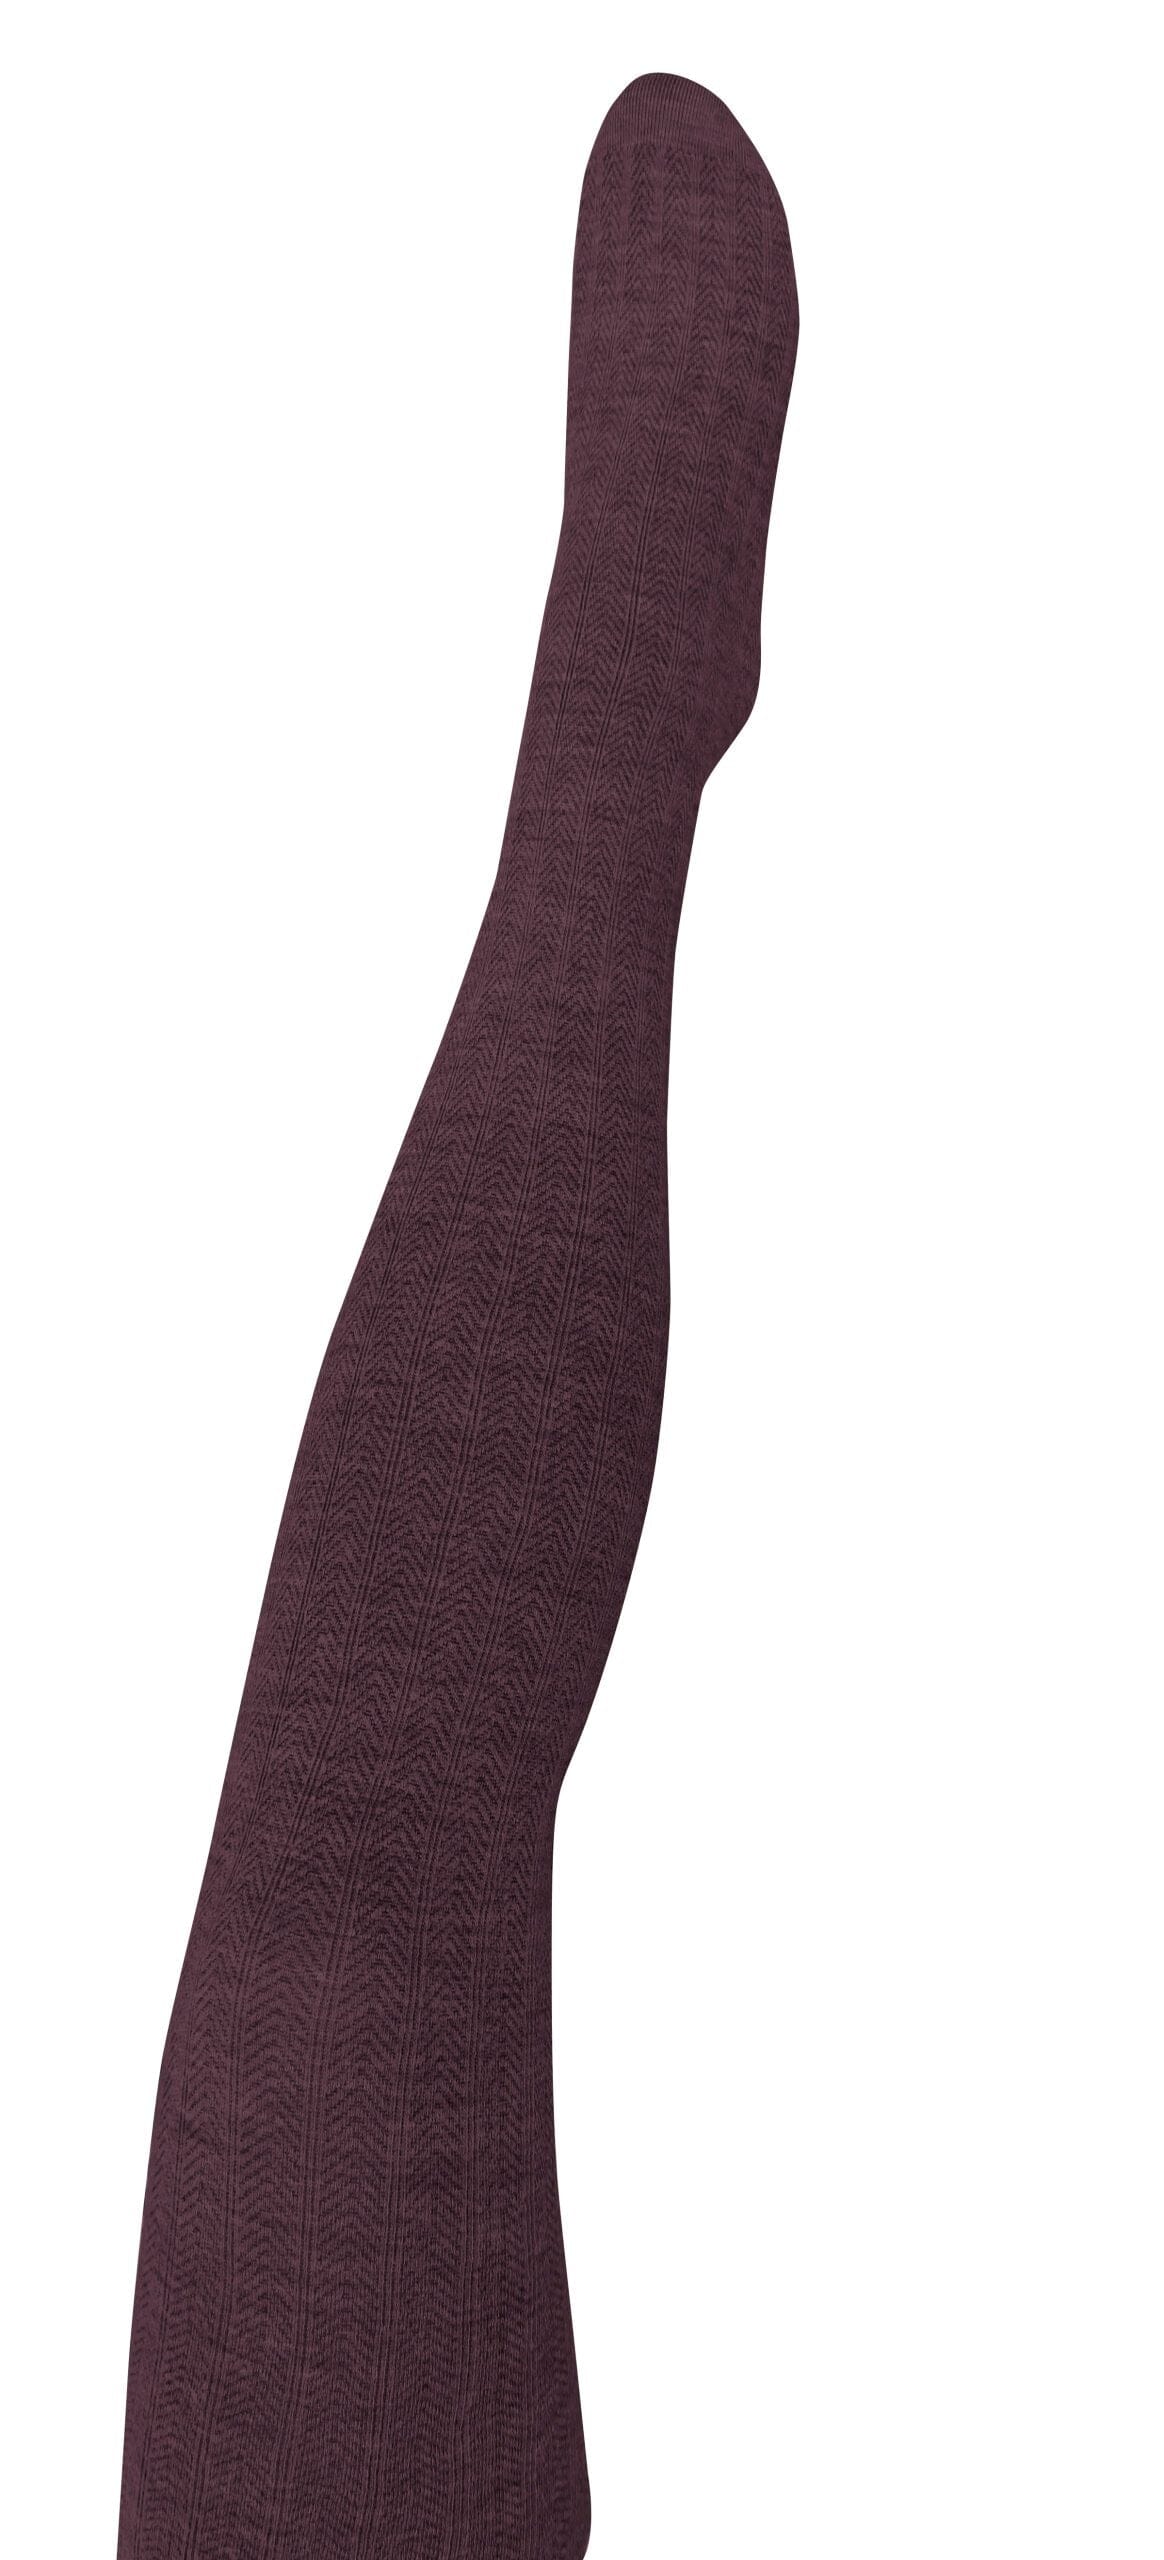 ‘Martini’ Merino Wool Tights - Tightology Tights Tightology Blackberry Medium/Tall 